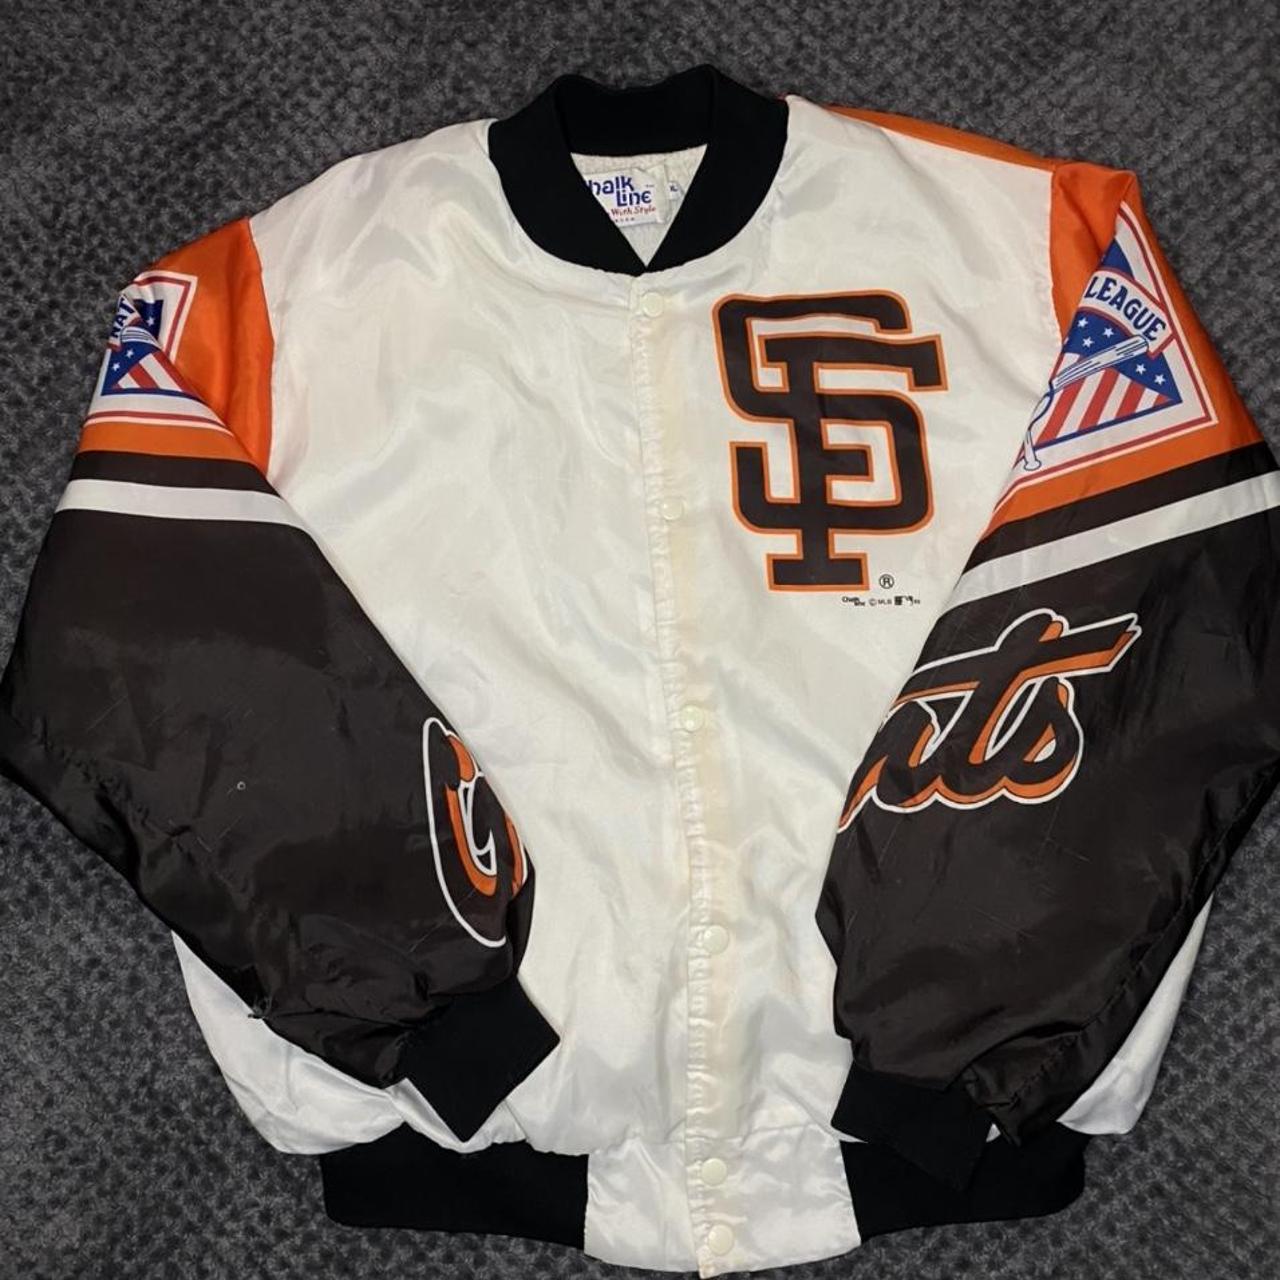 1989 San Francisco Giants Sixers Chalkline MLB Fanimation Jacket